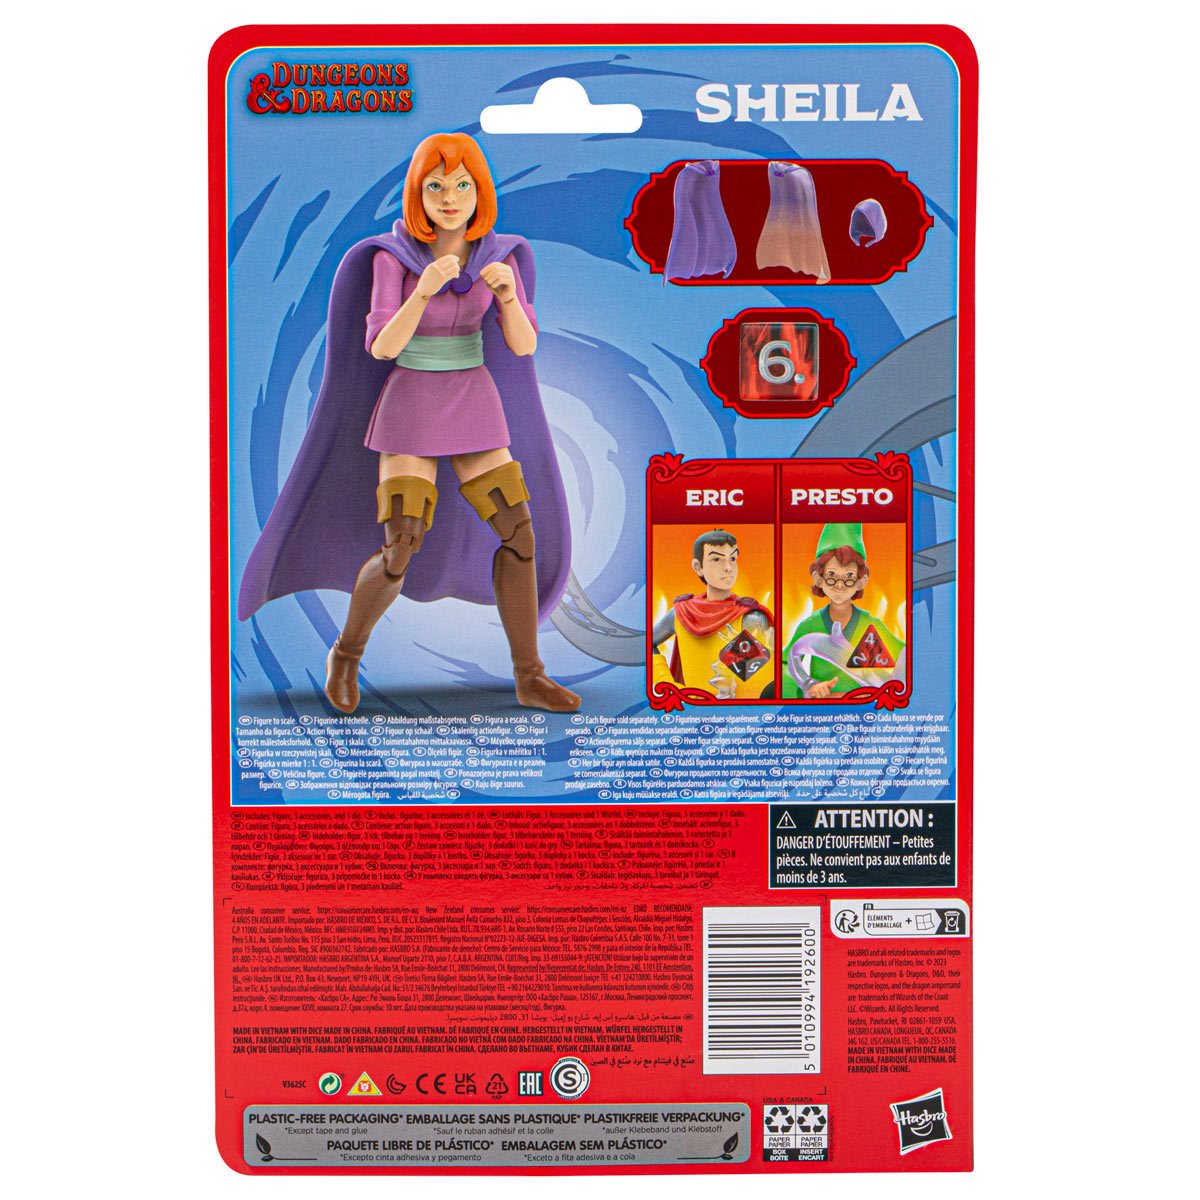 Dungeons & Dragons Cartoon Classics Sheila HSF4878 5010994192600